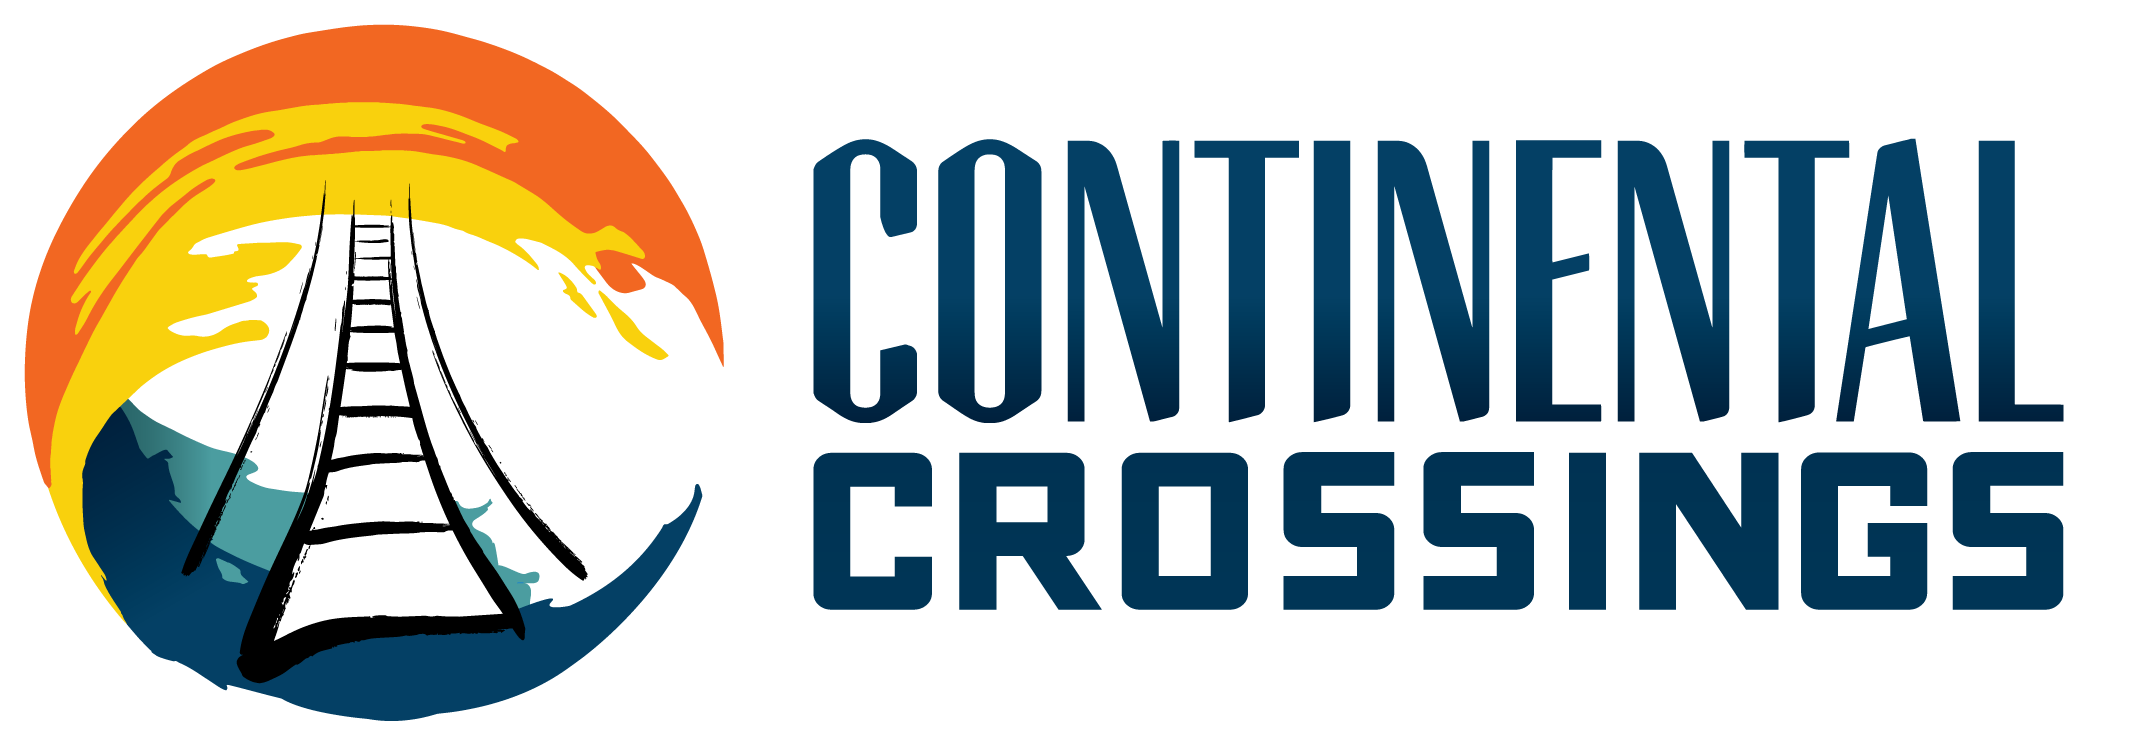 Continental Crossings